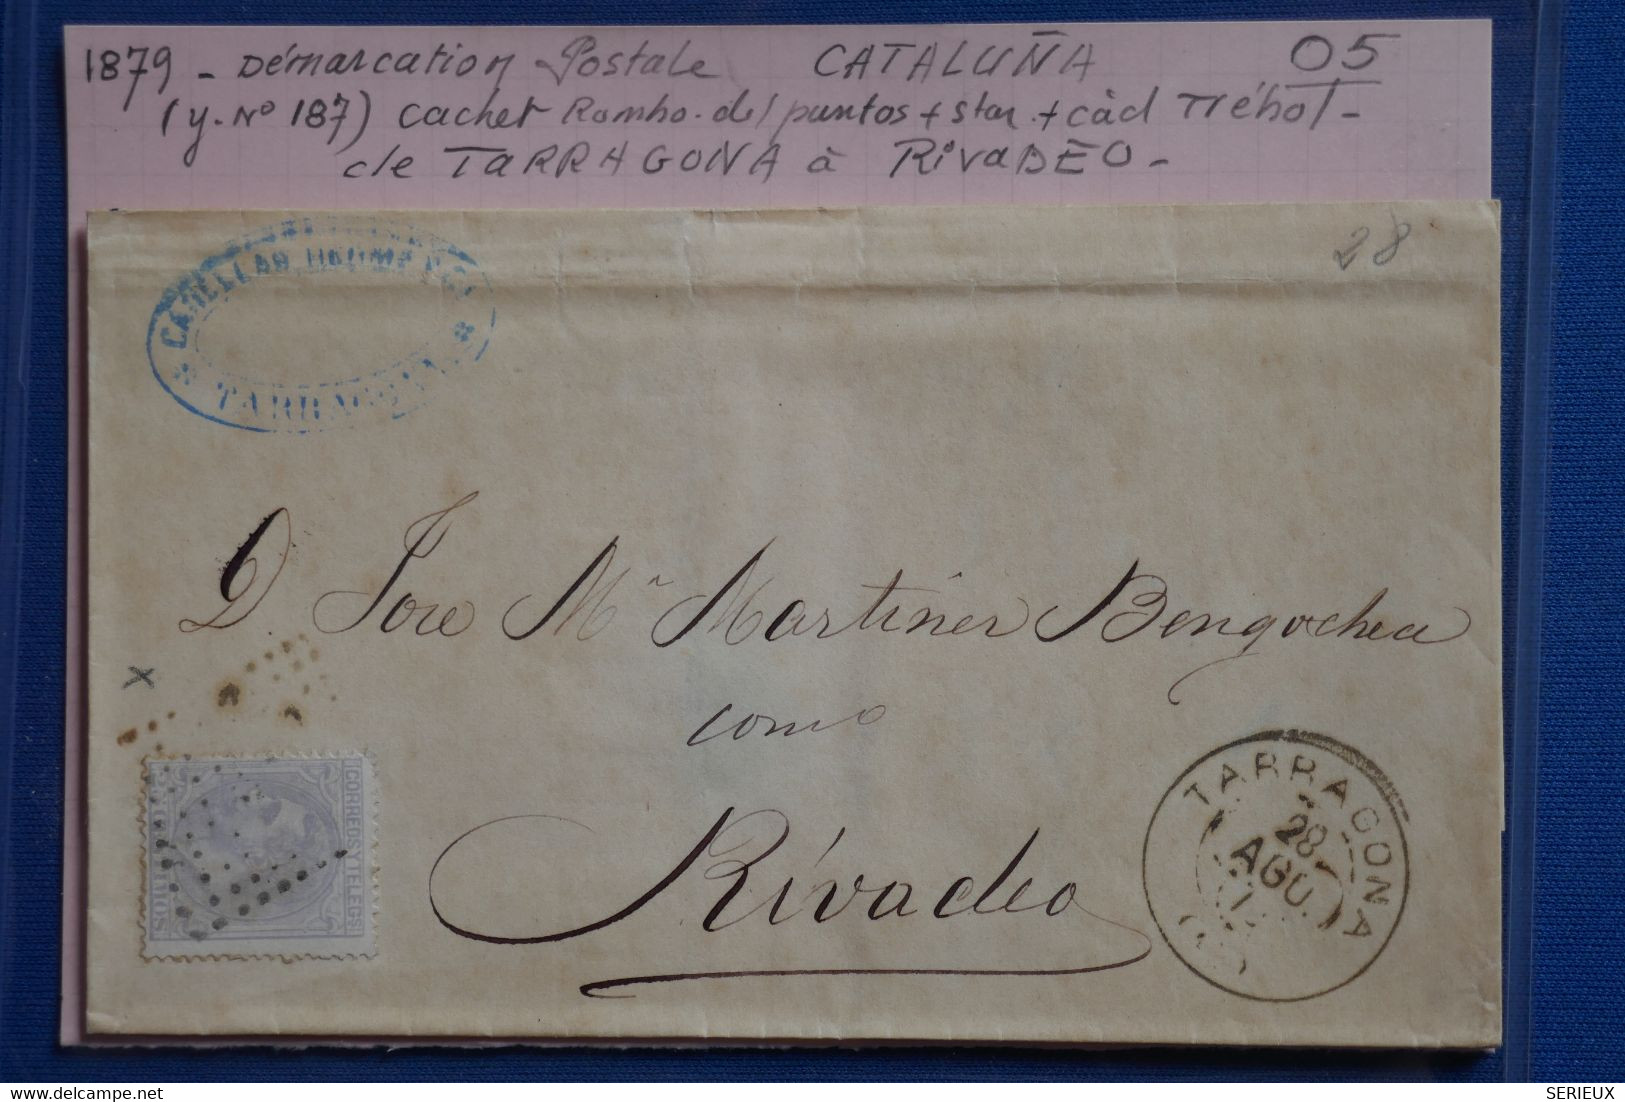 V6 ESPAGNE BELLE LETTRE  1879 CATALUNA TARRAGONA POUR RIVADEO   + AFFRANCH. INTERESSANT - Briefe U. Dokumente